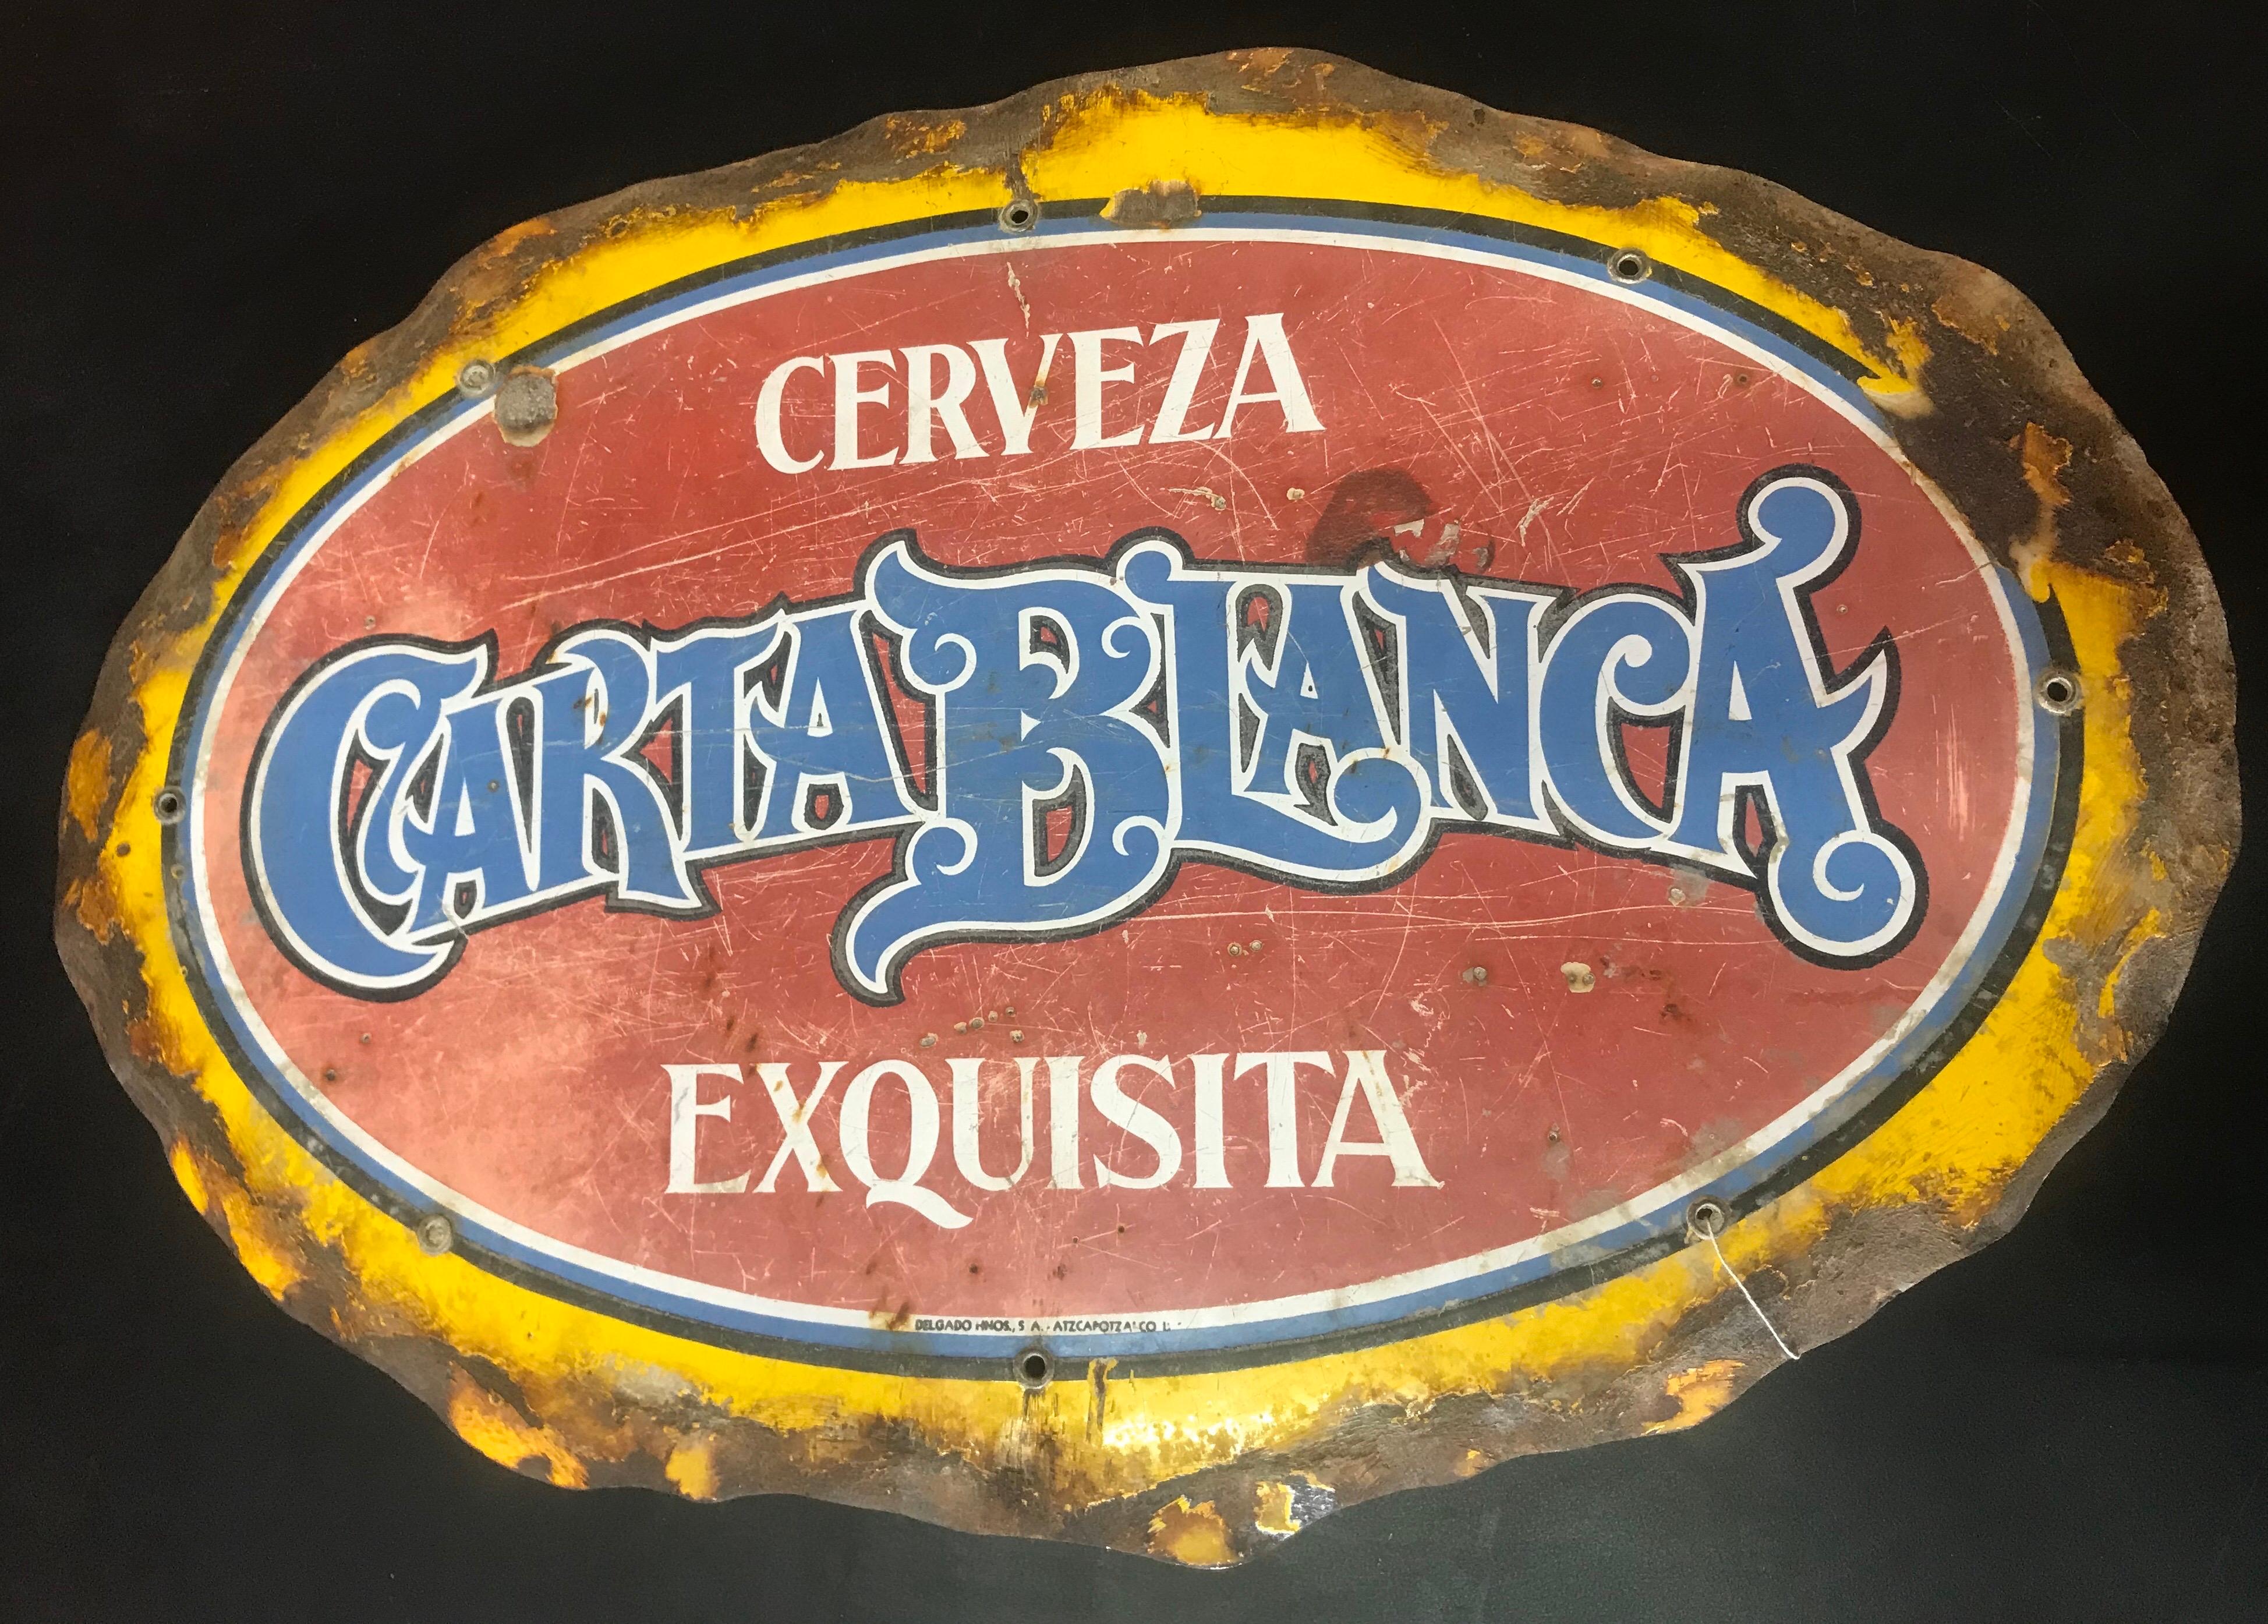 Rare Carta Blanca beer porcelain metal sign.
Mexico, ca. 1940’s.